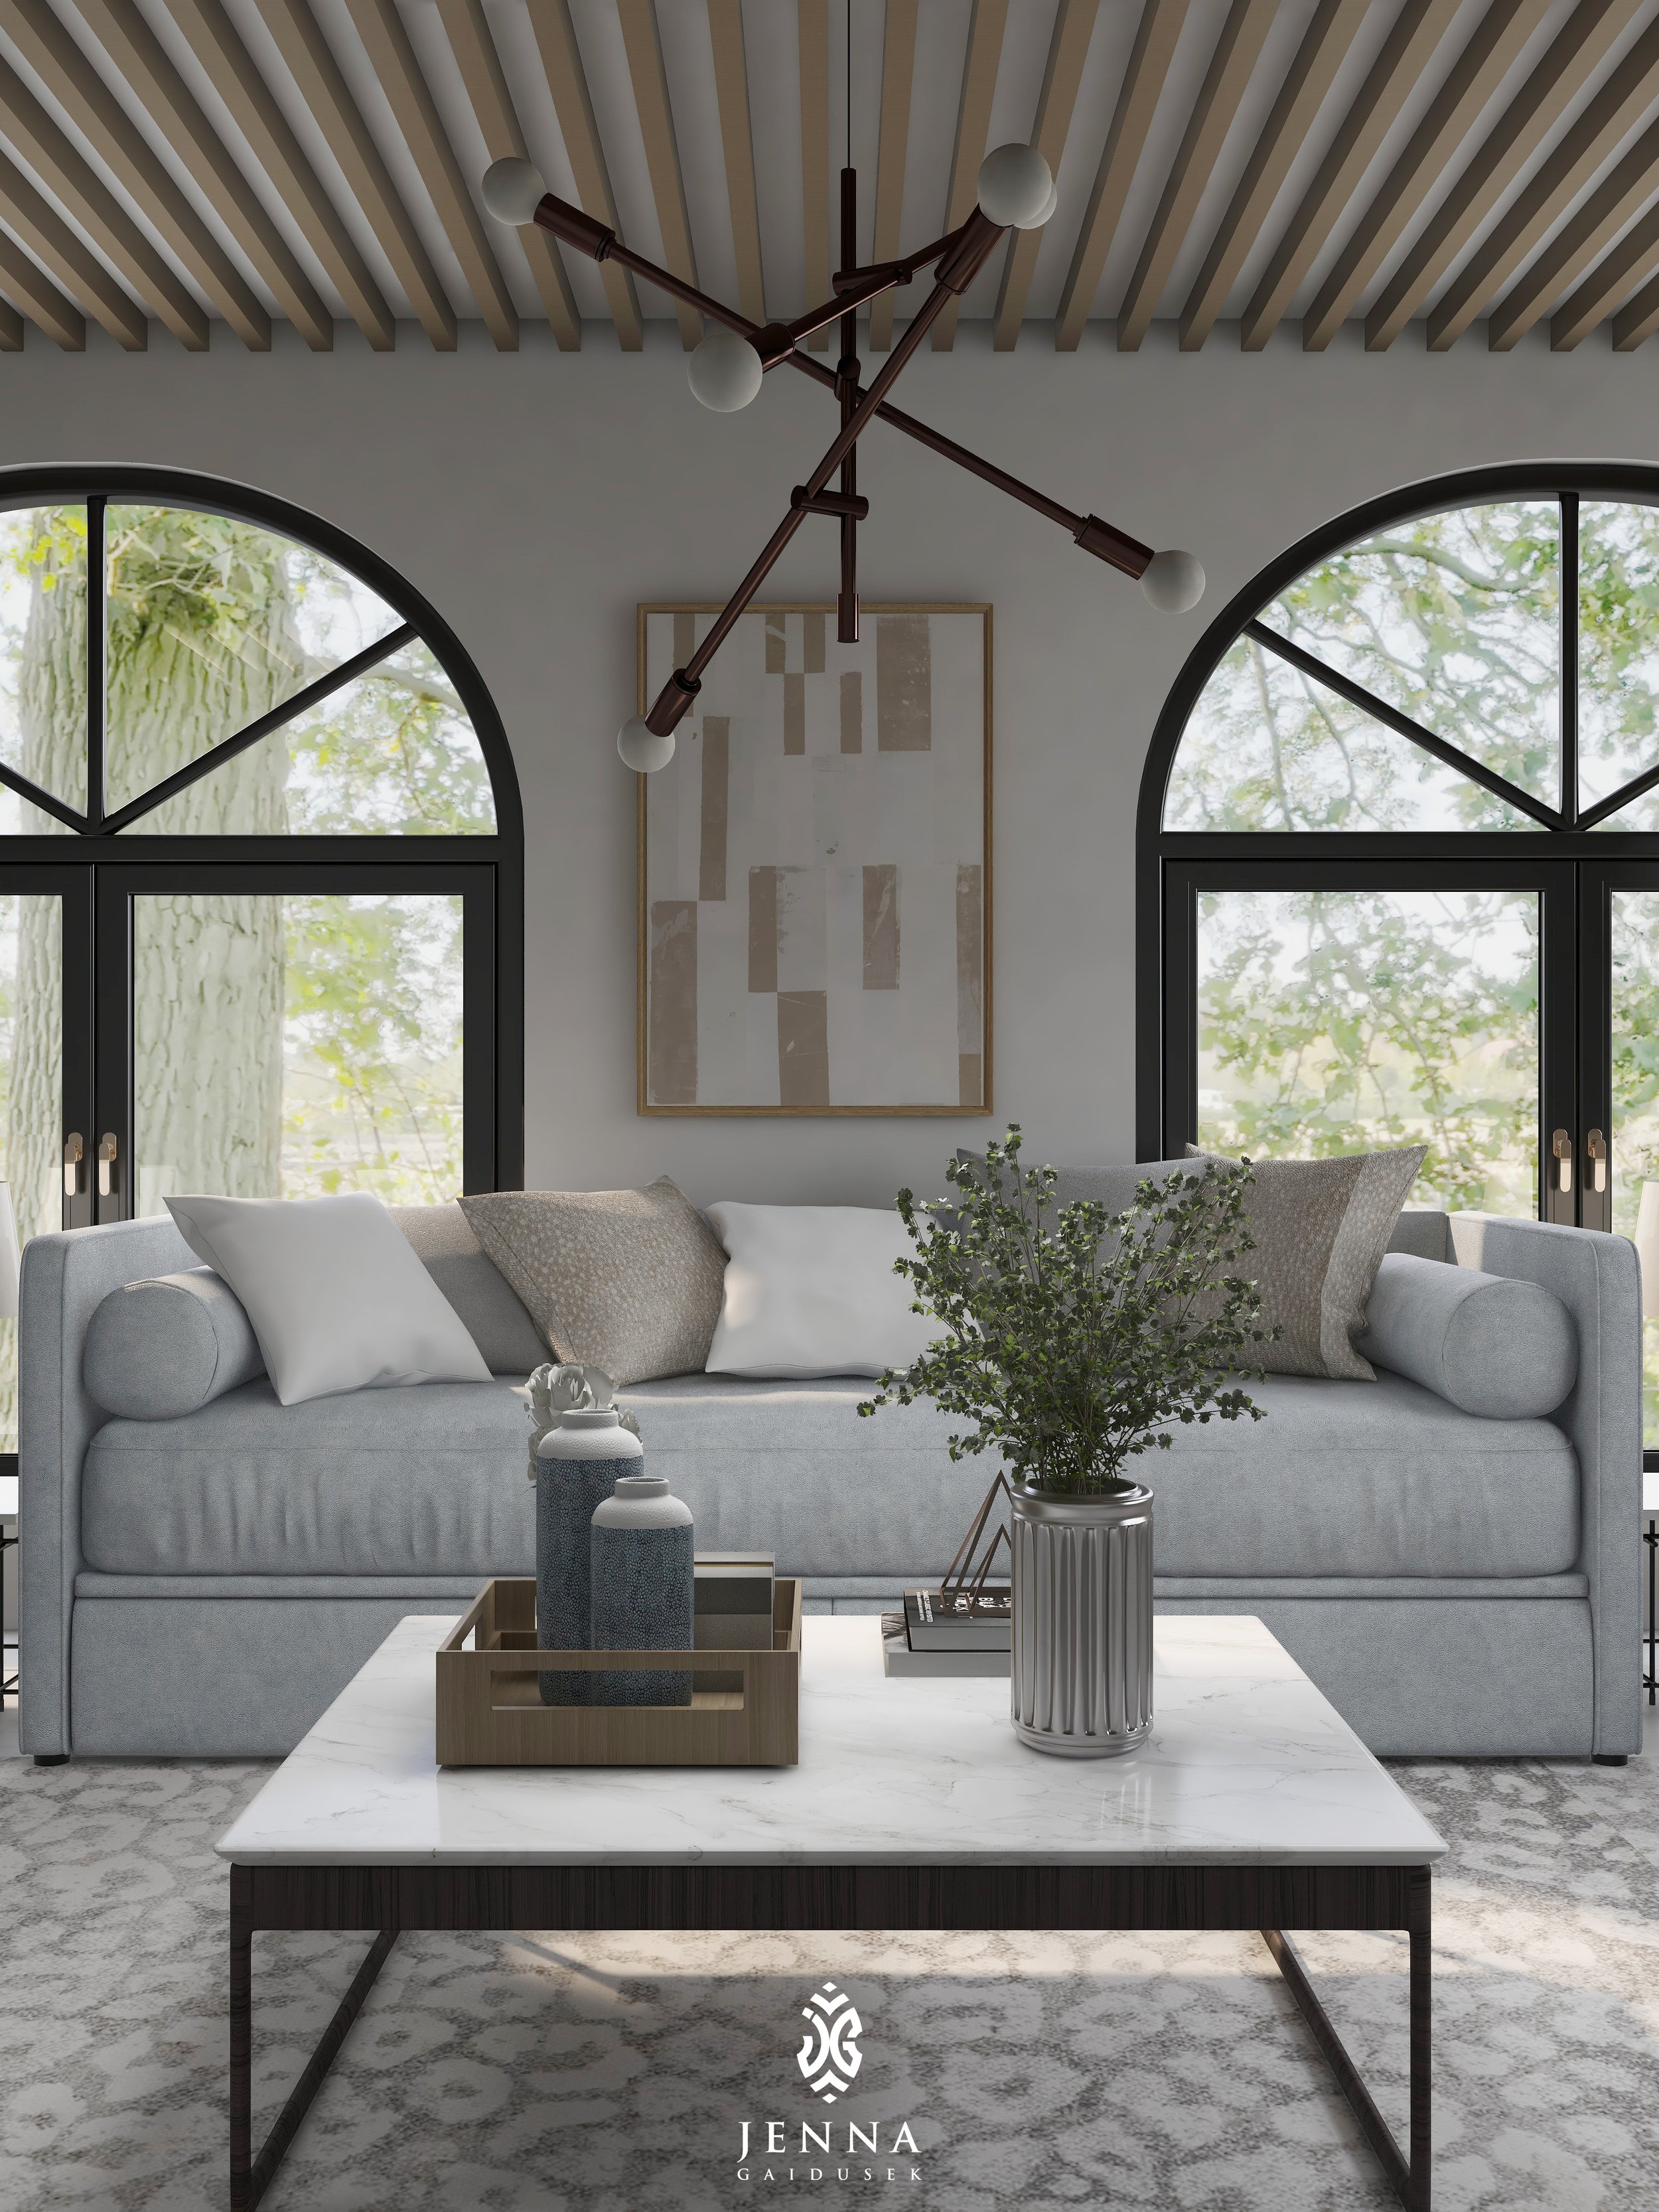 Cozy living room- online interior designer jenna gaidusek.jpg